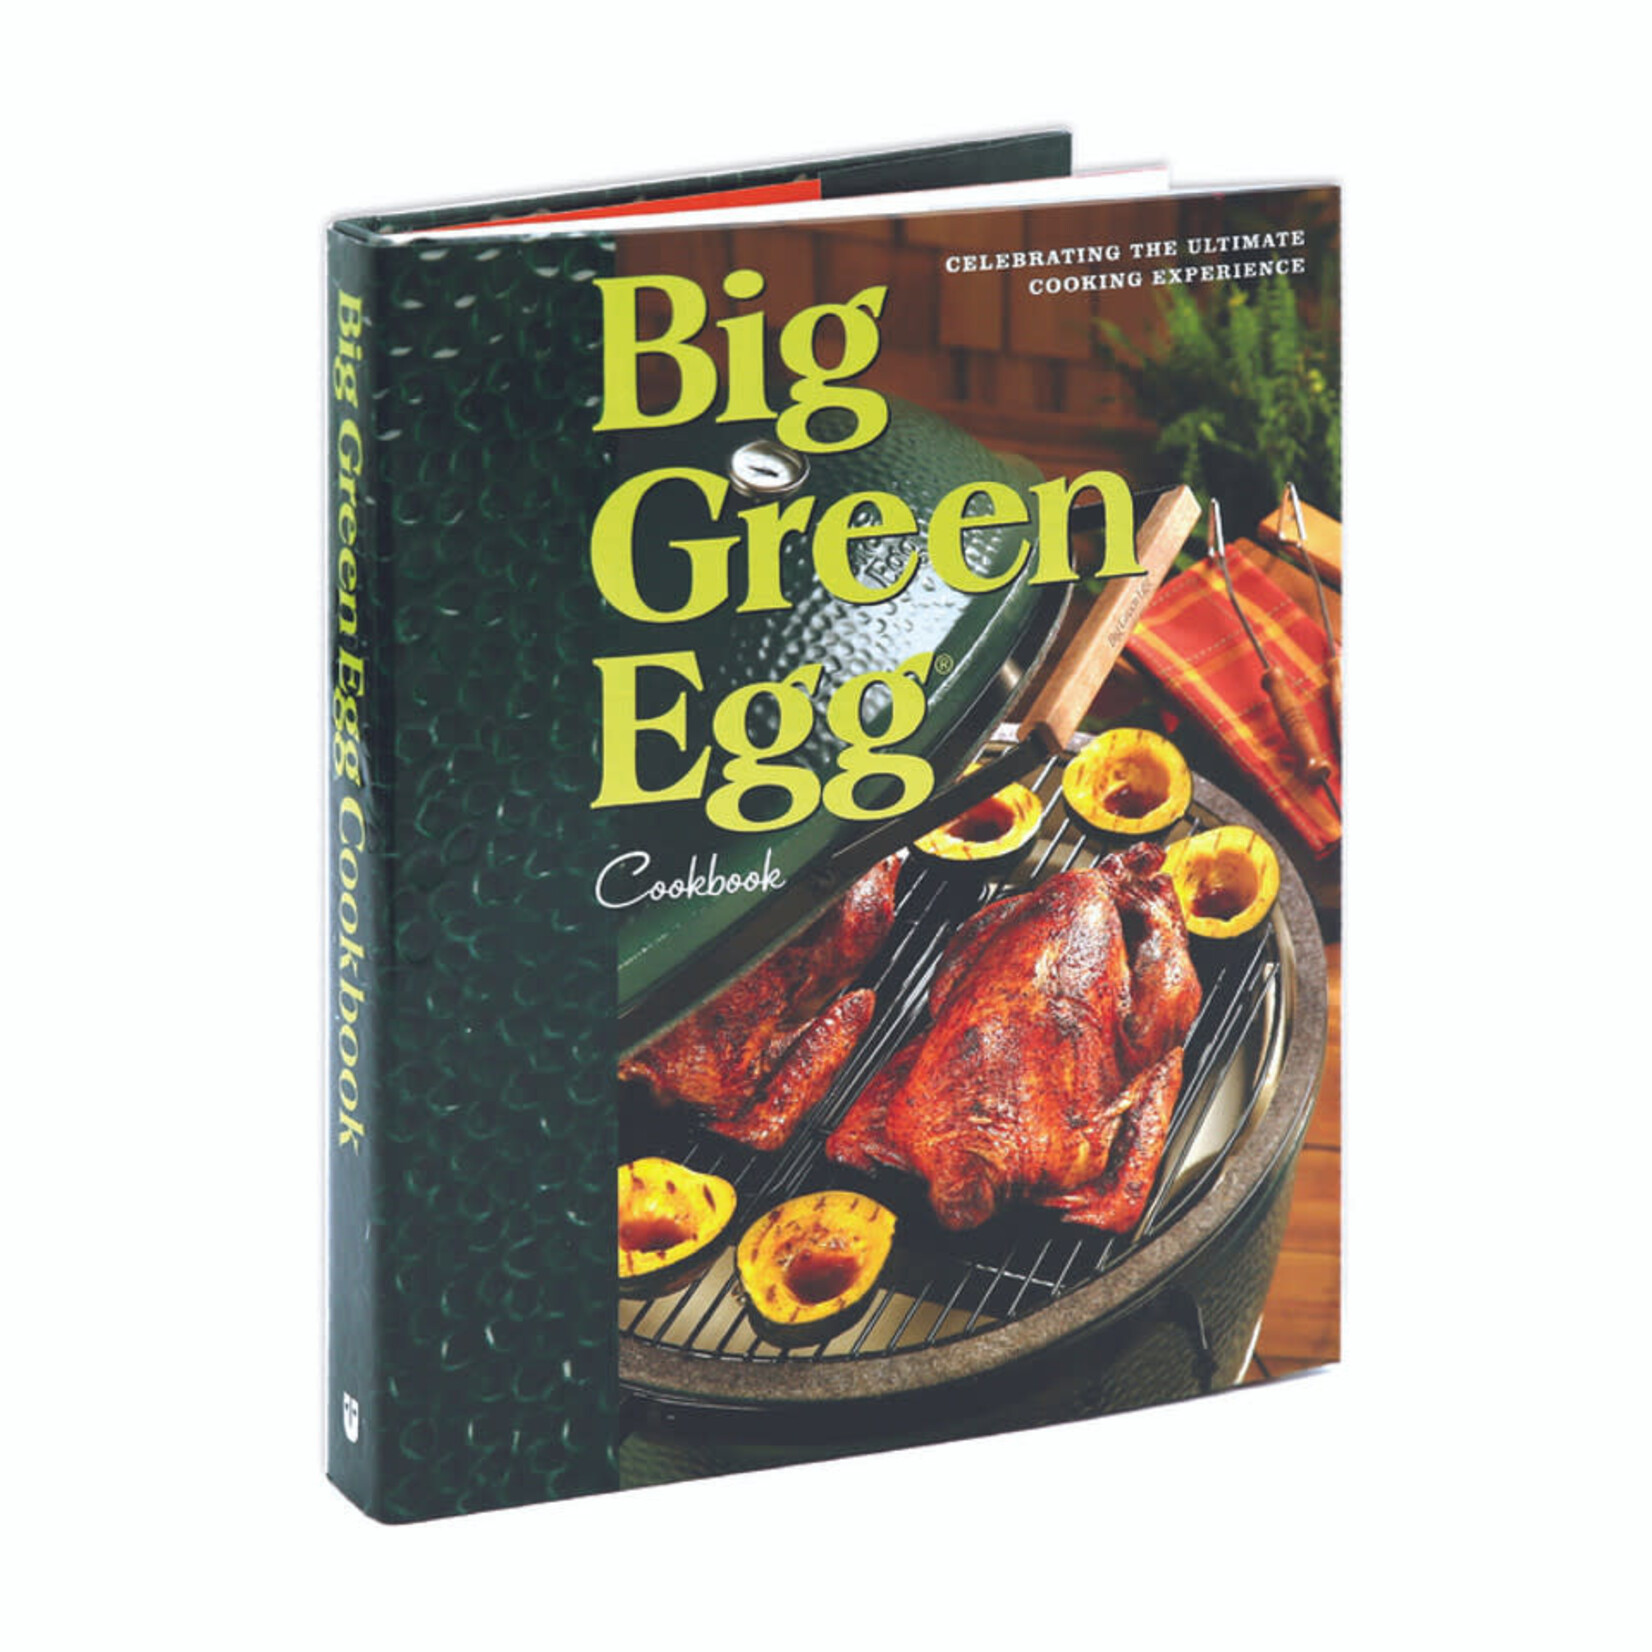 Green Egg The Original Big Green Egg Cookbook, 320 Page Hardcover